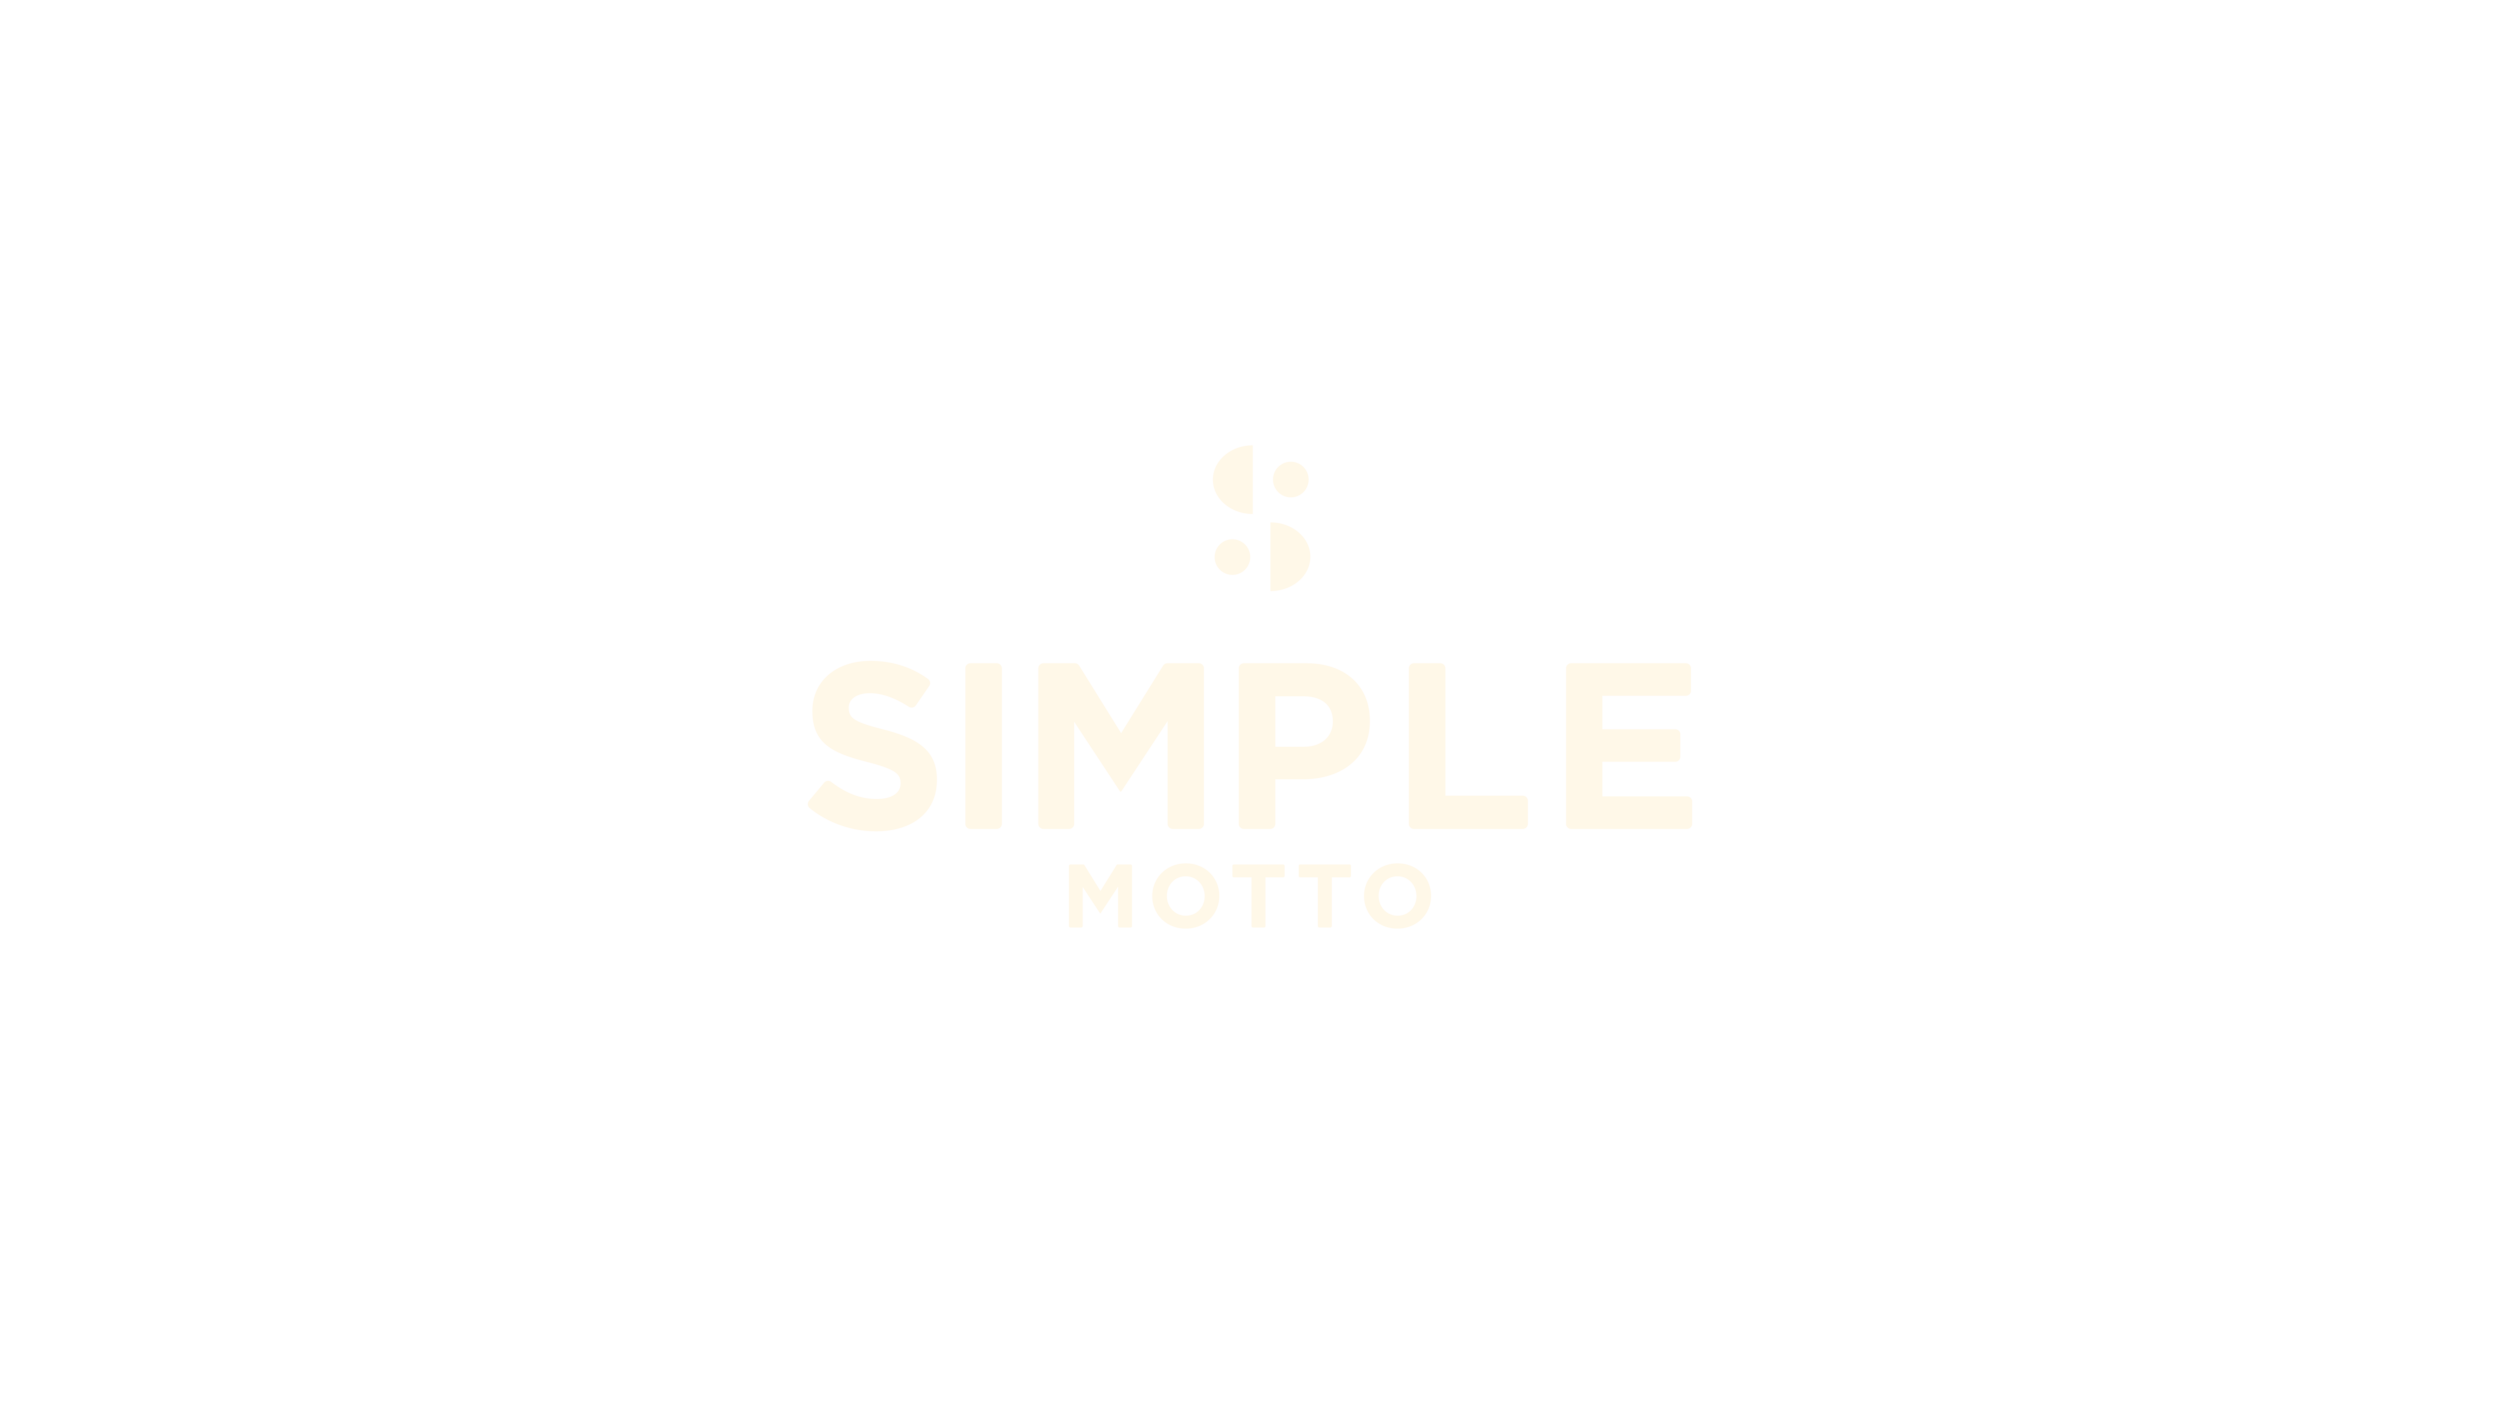 Simple Motto